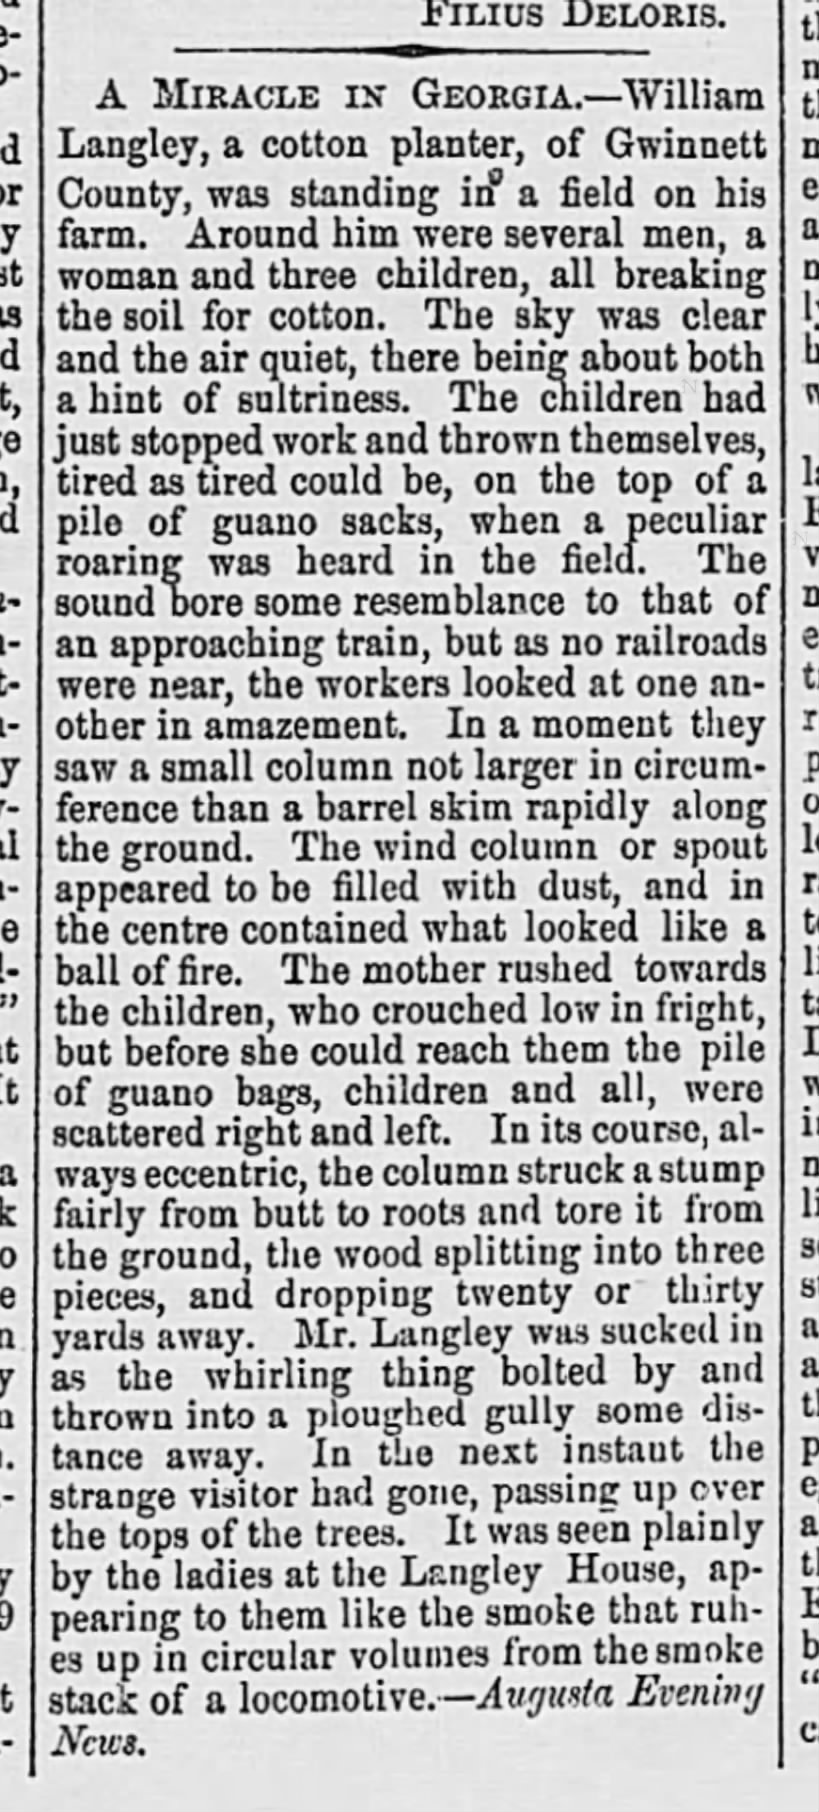 Strange fireball story 1879